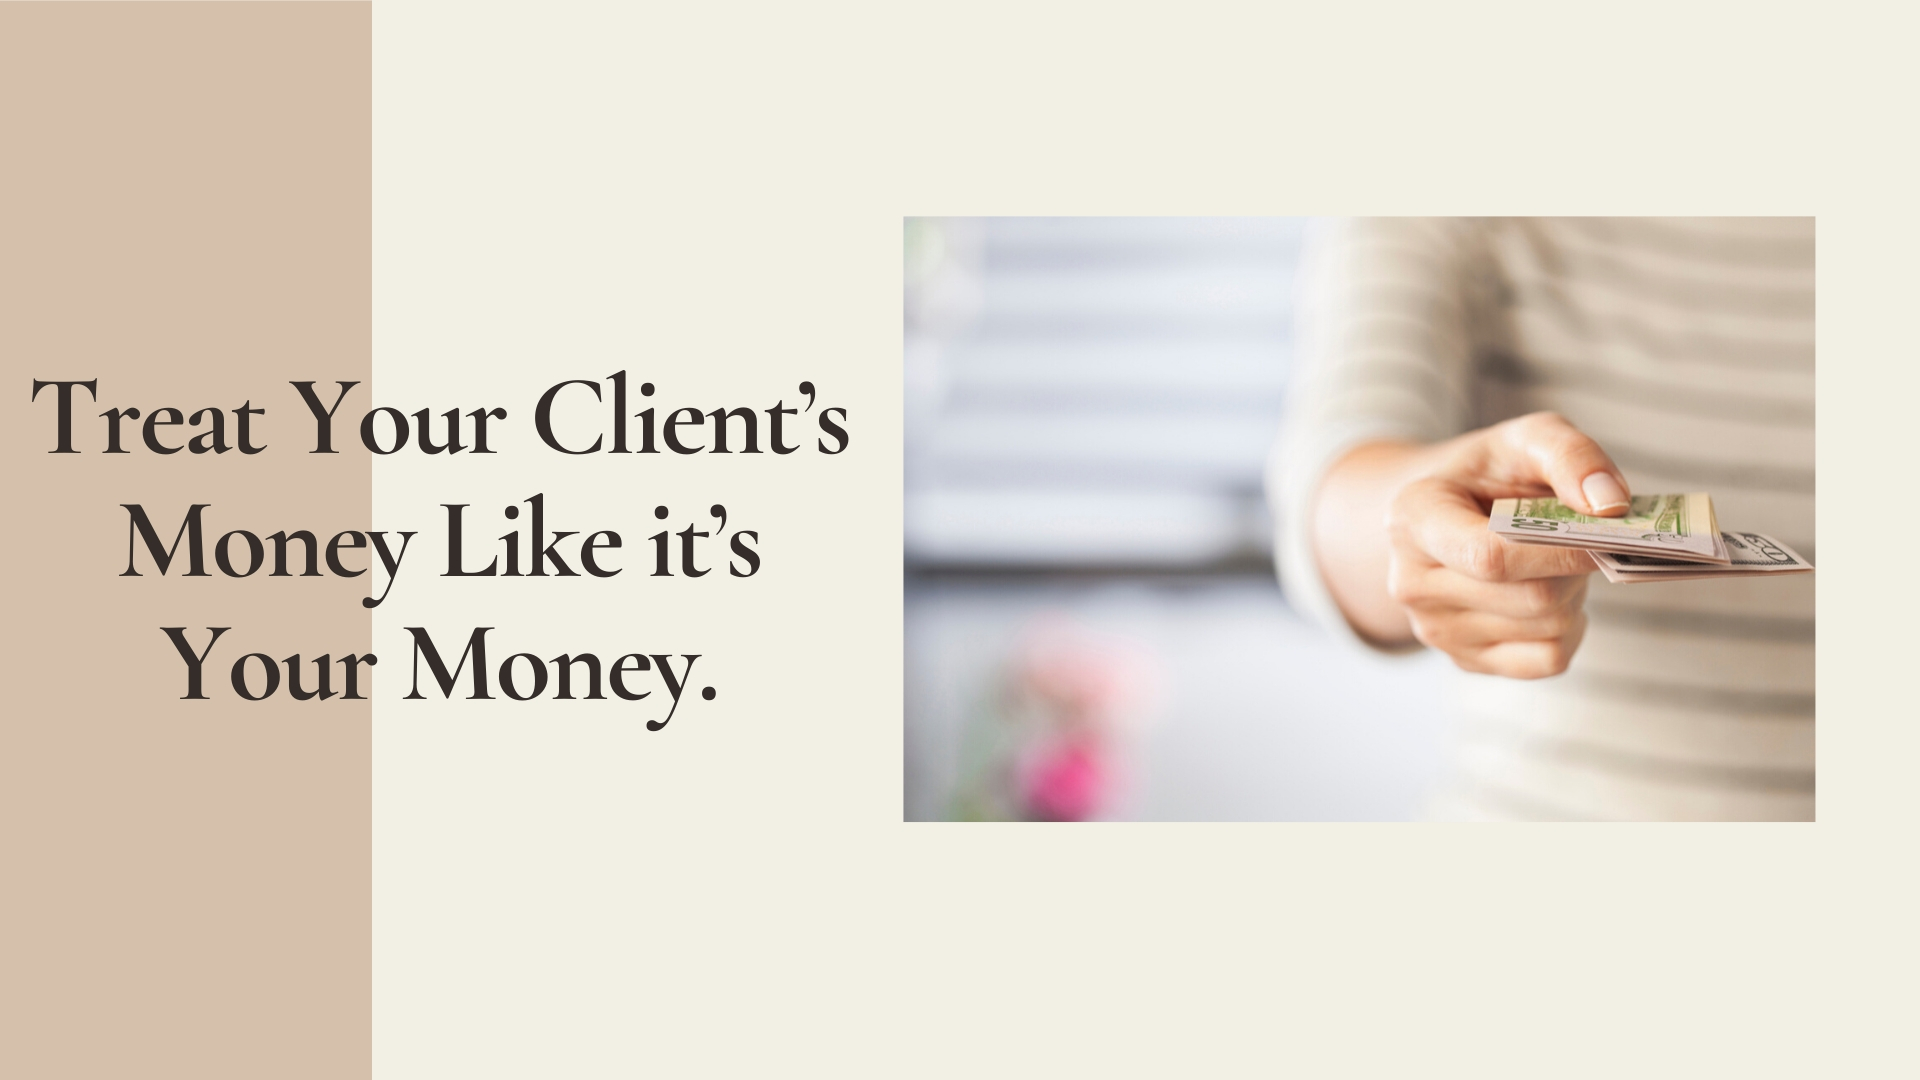 Treat Your Client’s Money Like it’s Your Money